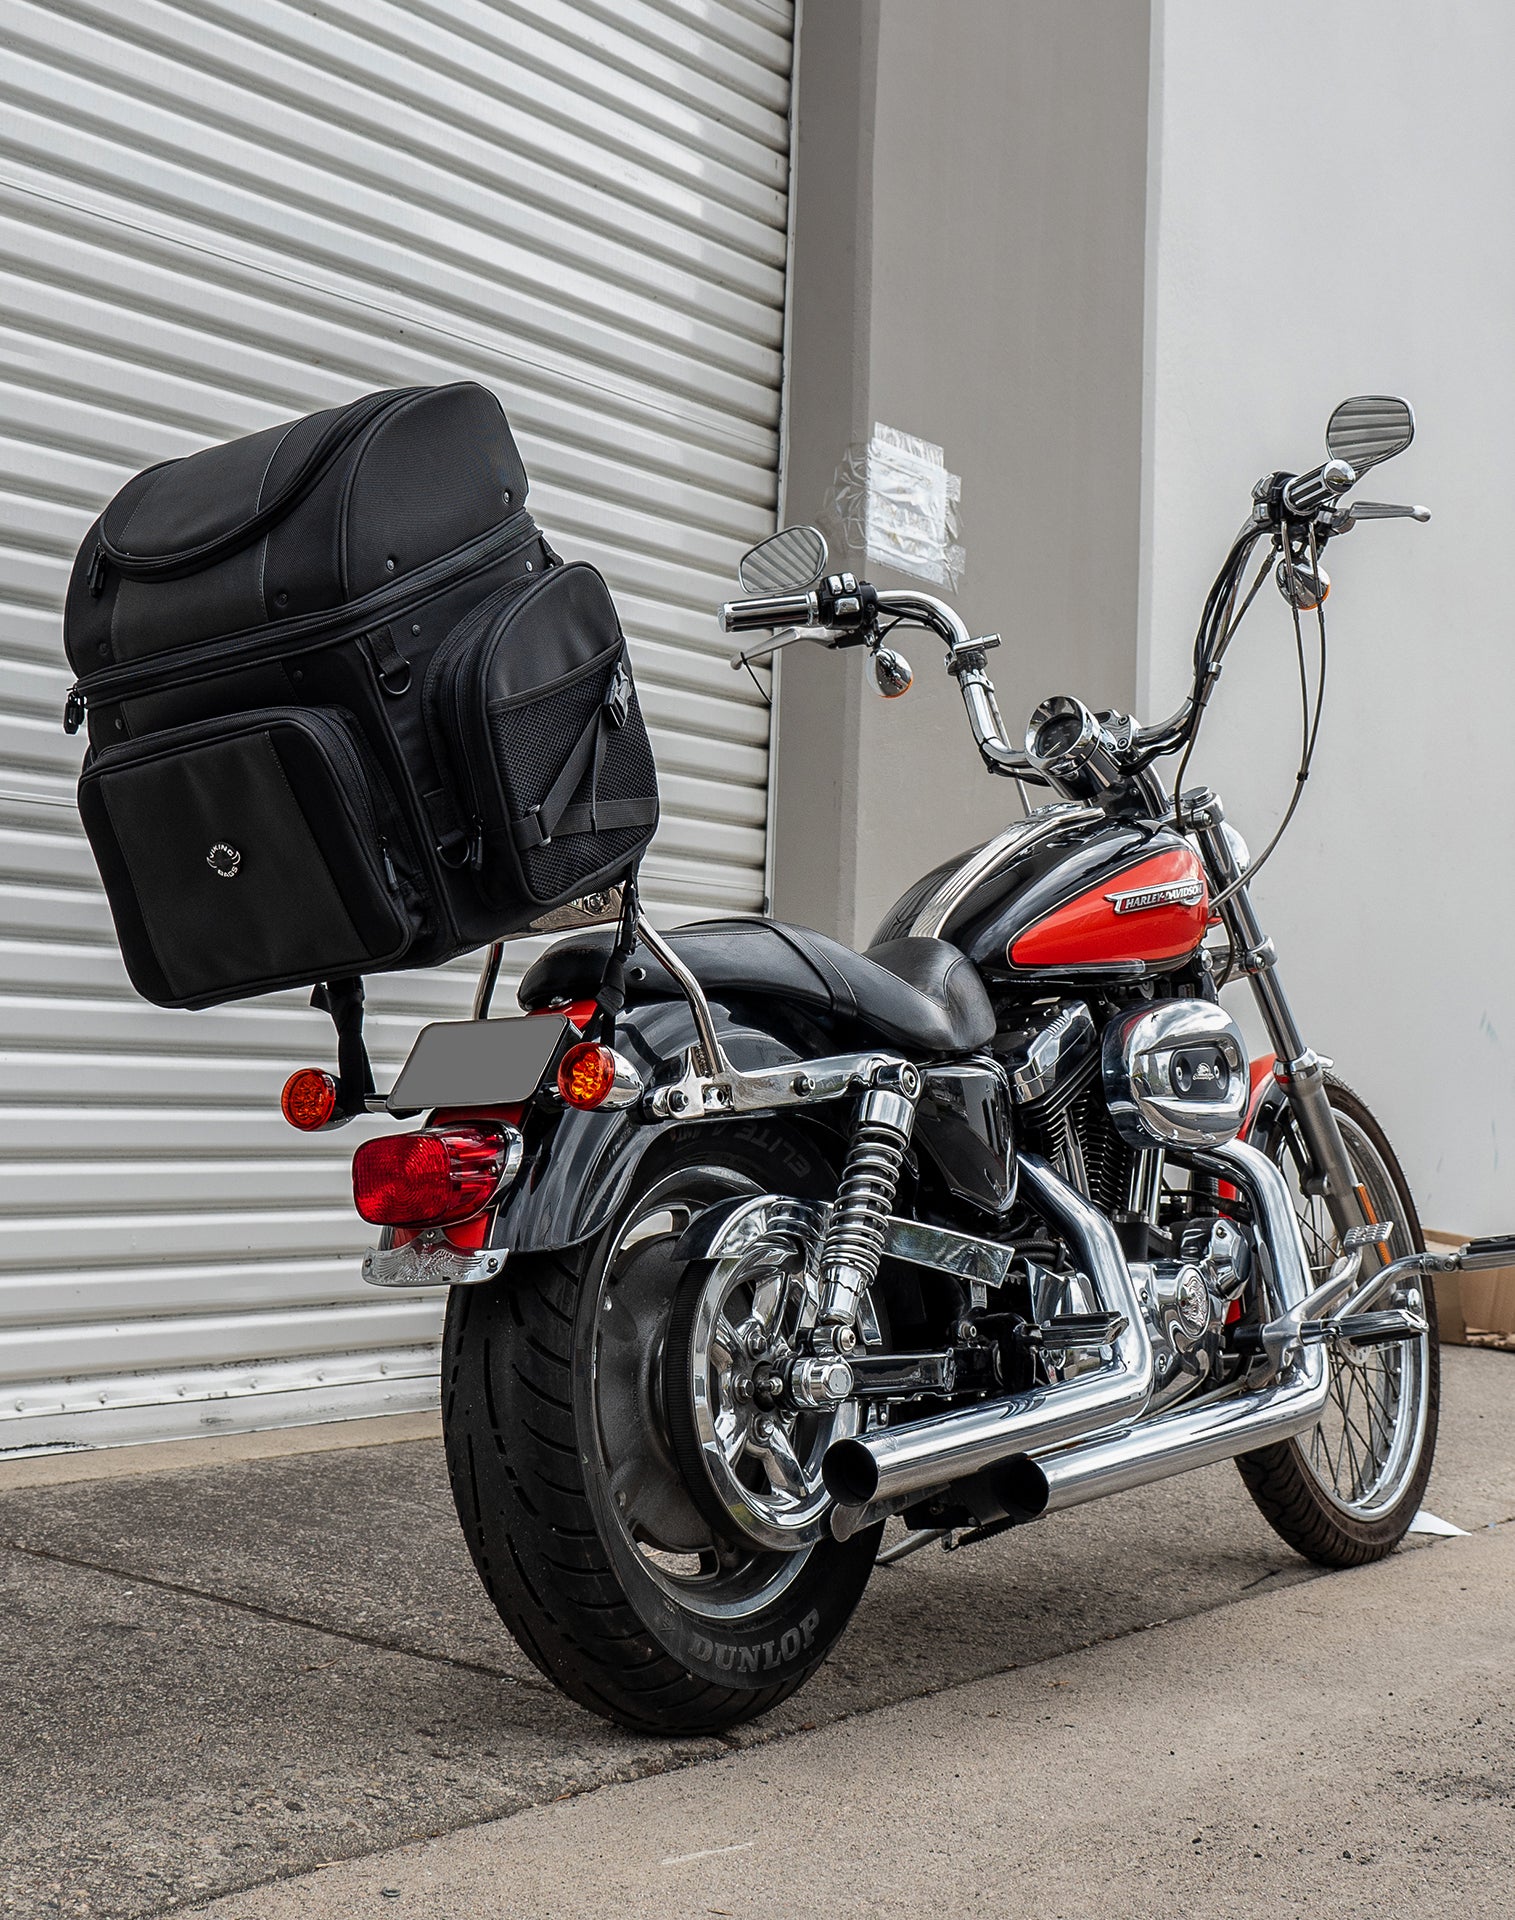 52L - Galleon XL Motorcycle Sissy Bar Bag